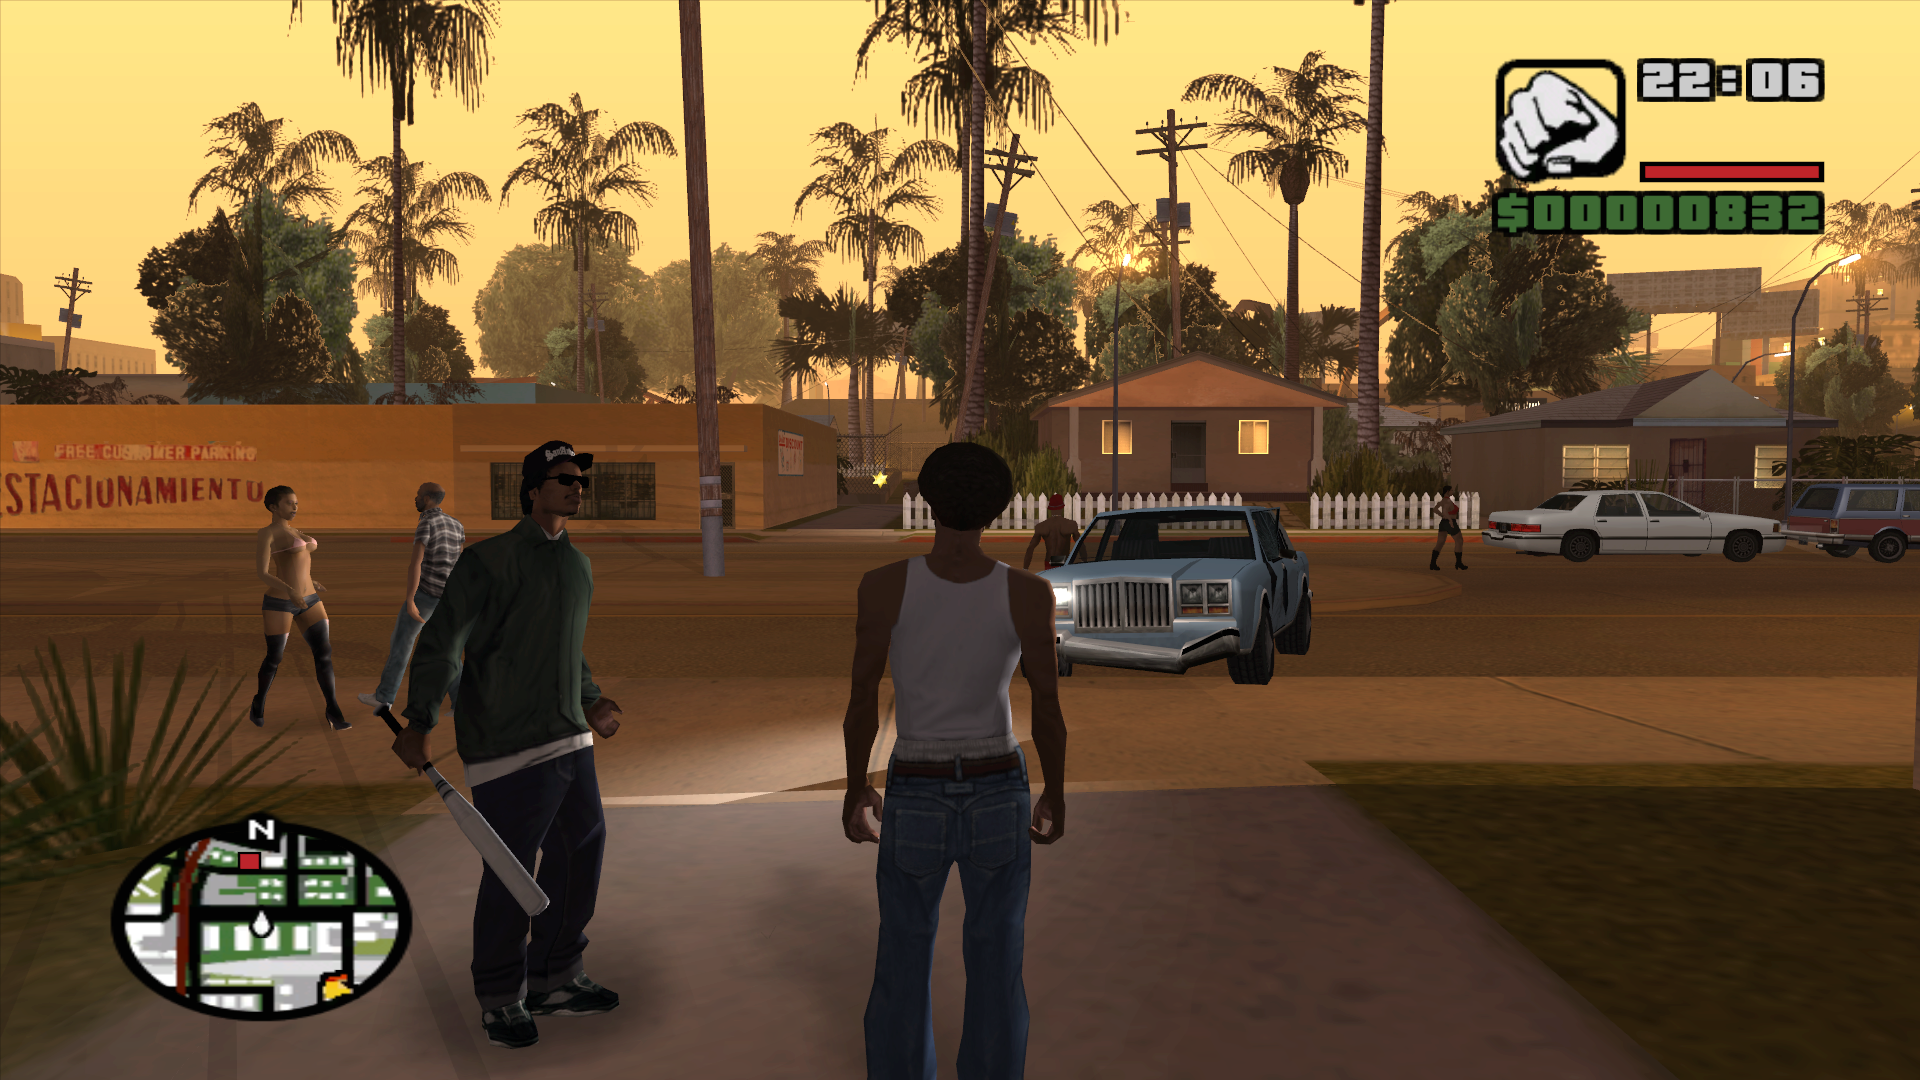 Выходы игры гта. Grand Theft auto Сан андреас. Grand Theft Anto San Adreas. Grand Theft auto San Andreas Grand. Grand Theft auto: San Andreas 2.